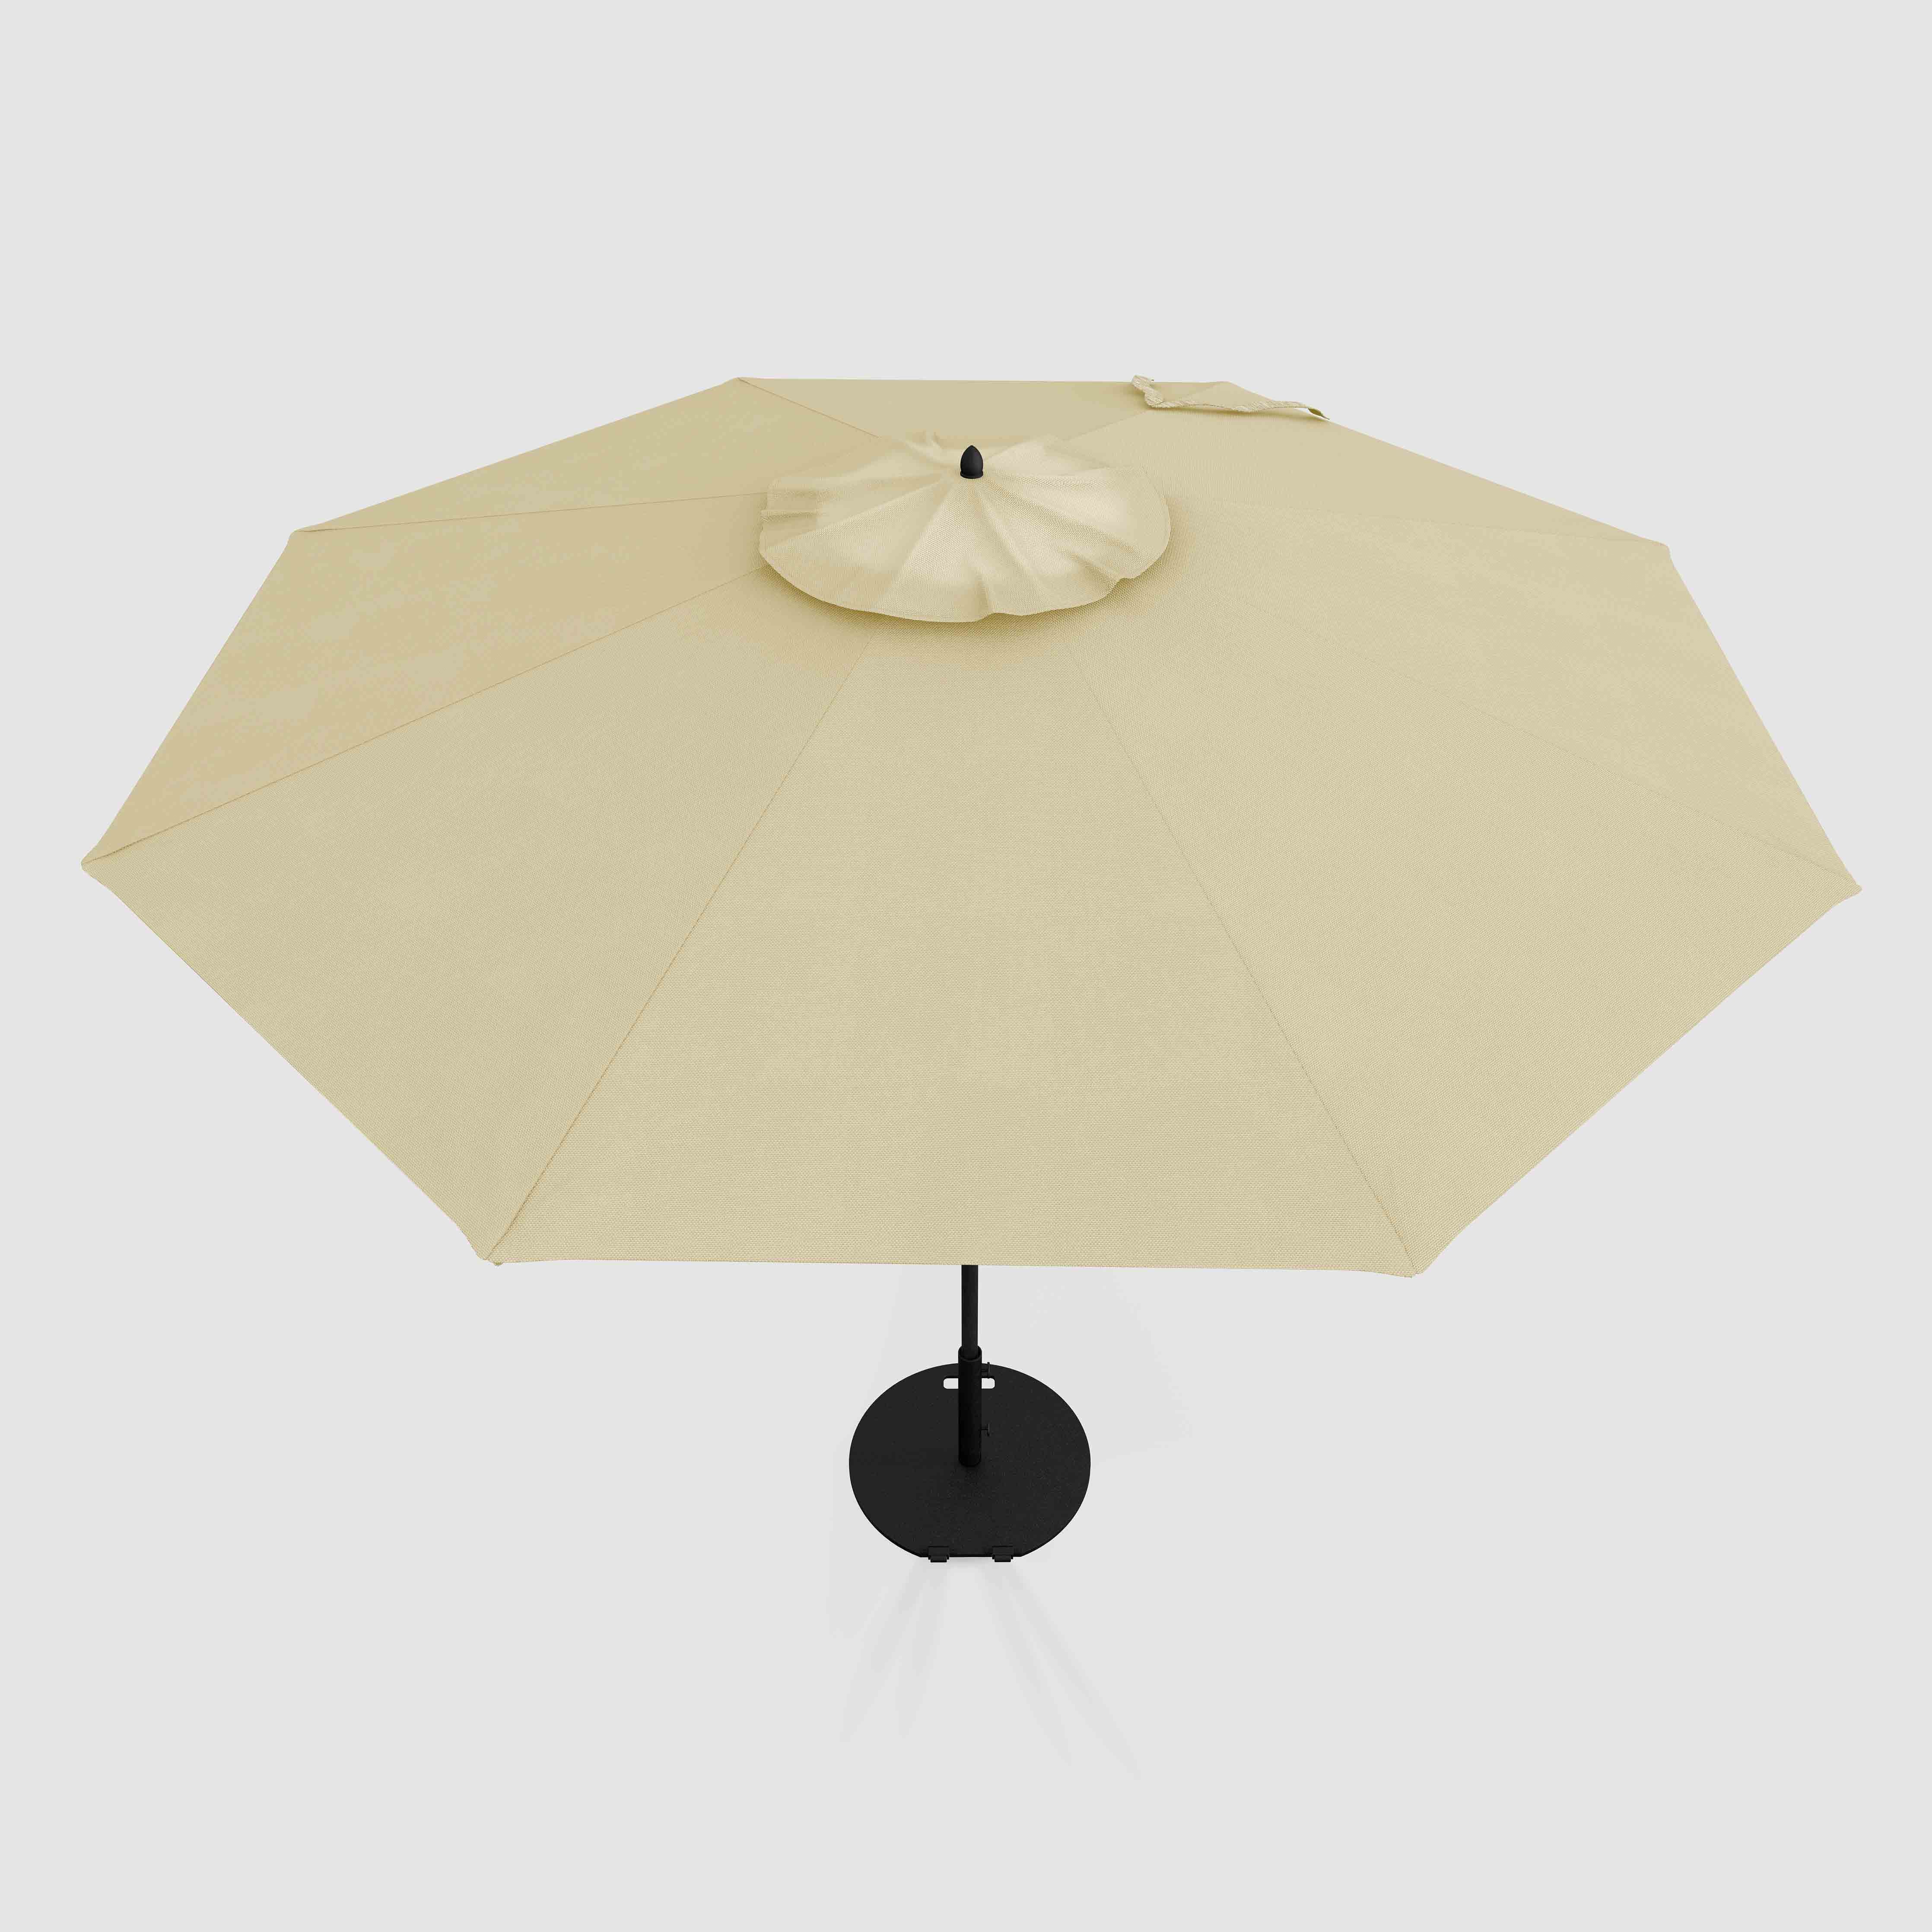 Patio Umbrellas Durable. Terylast Collection: